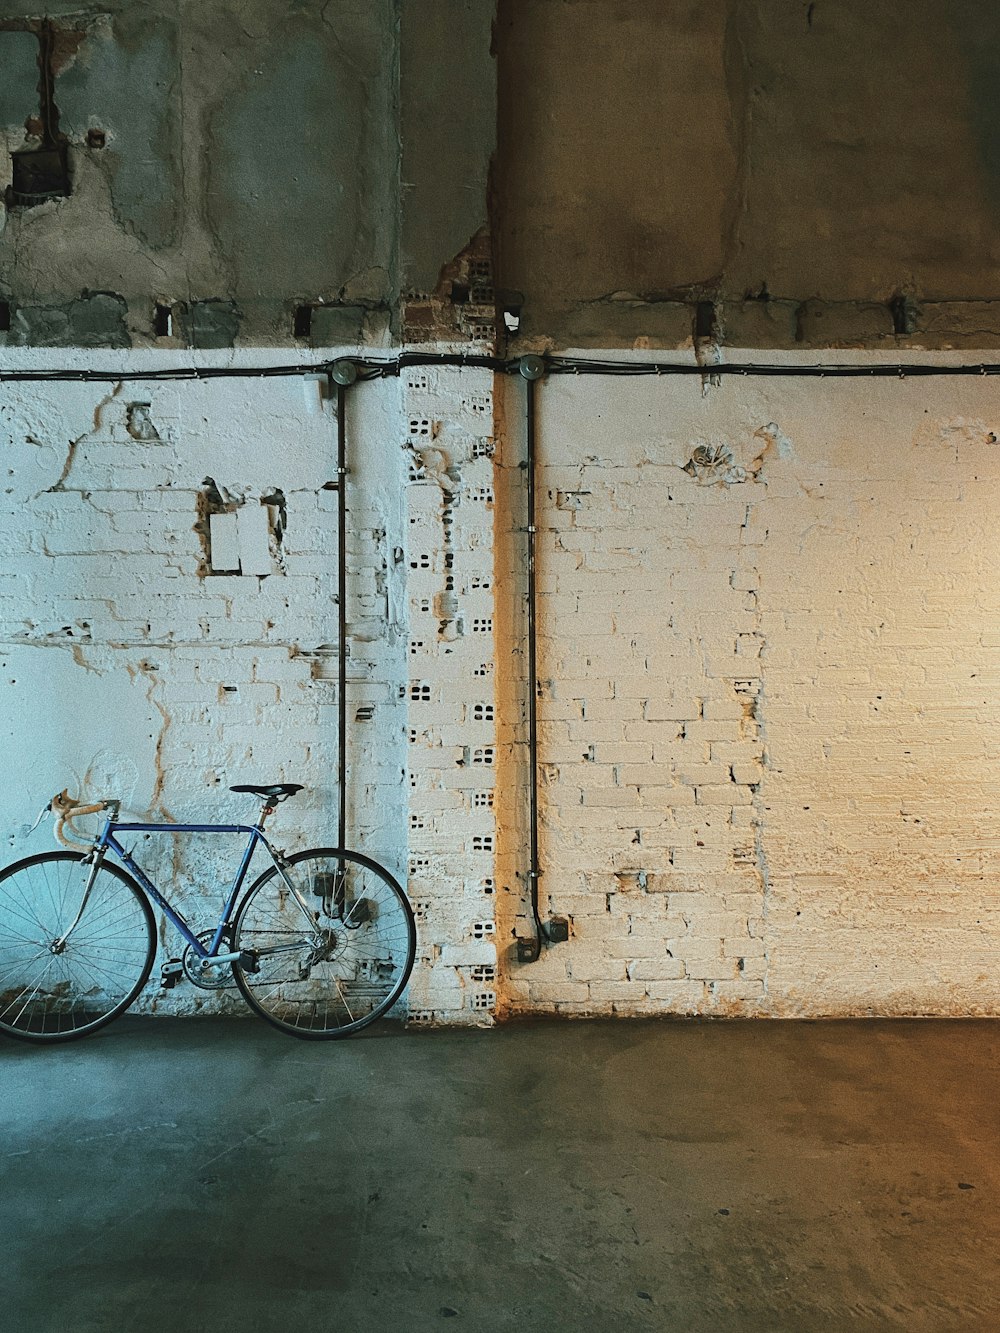 Blaues Citybike an weiße Wand gelehnt